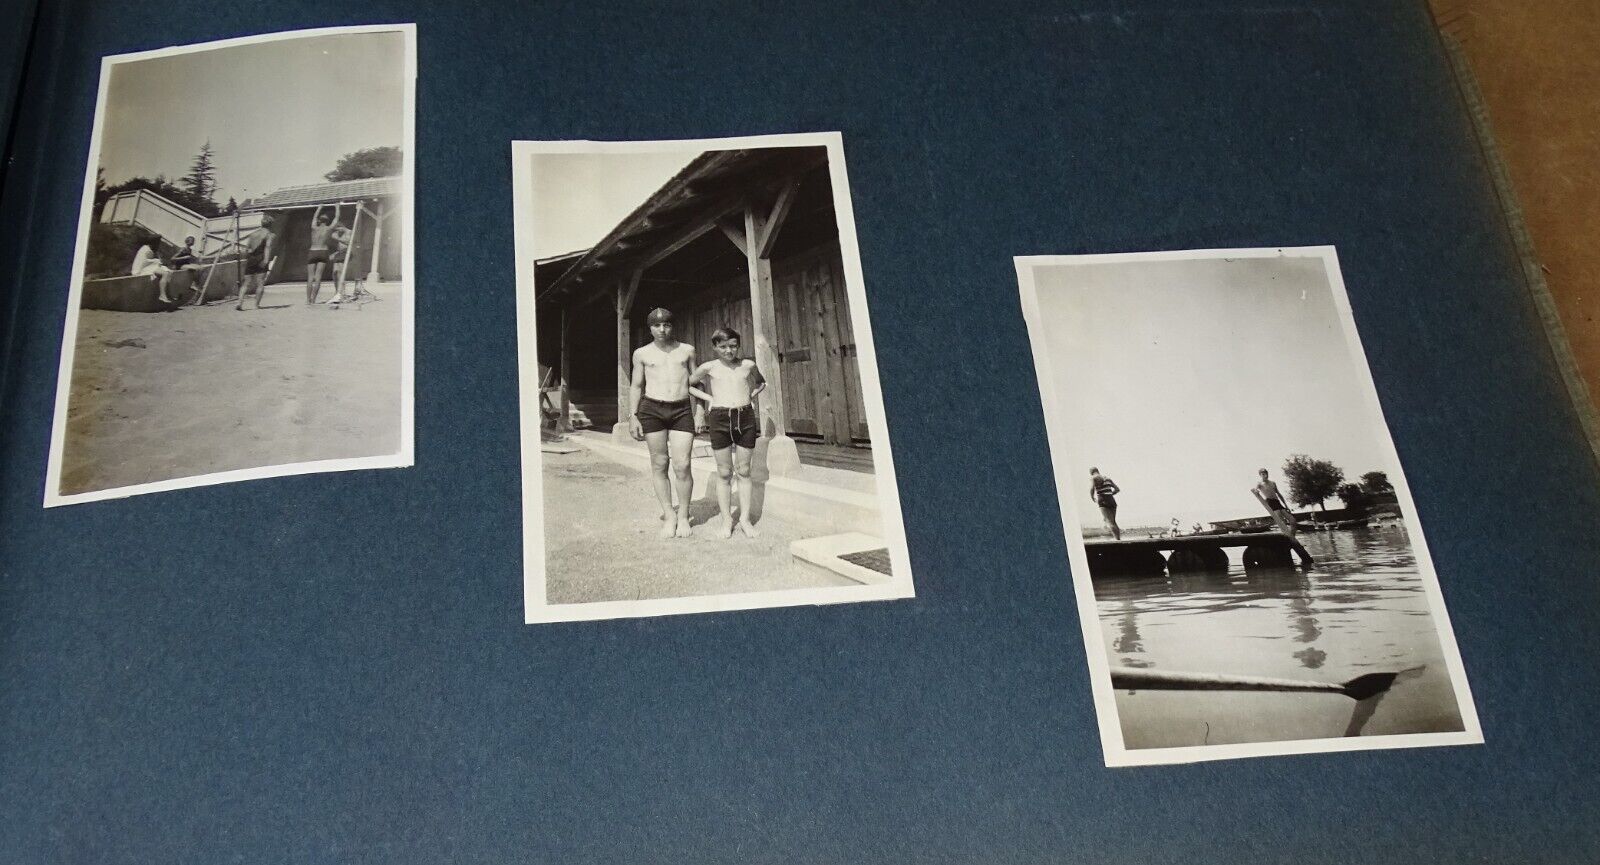 1920s? Photograph Album (family vacation?) 190 Photos - Austria? Netherlands?